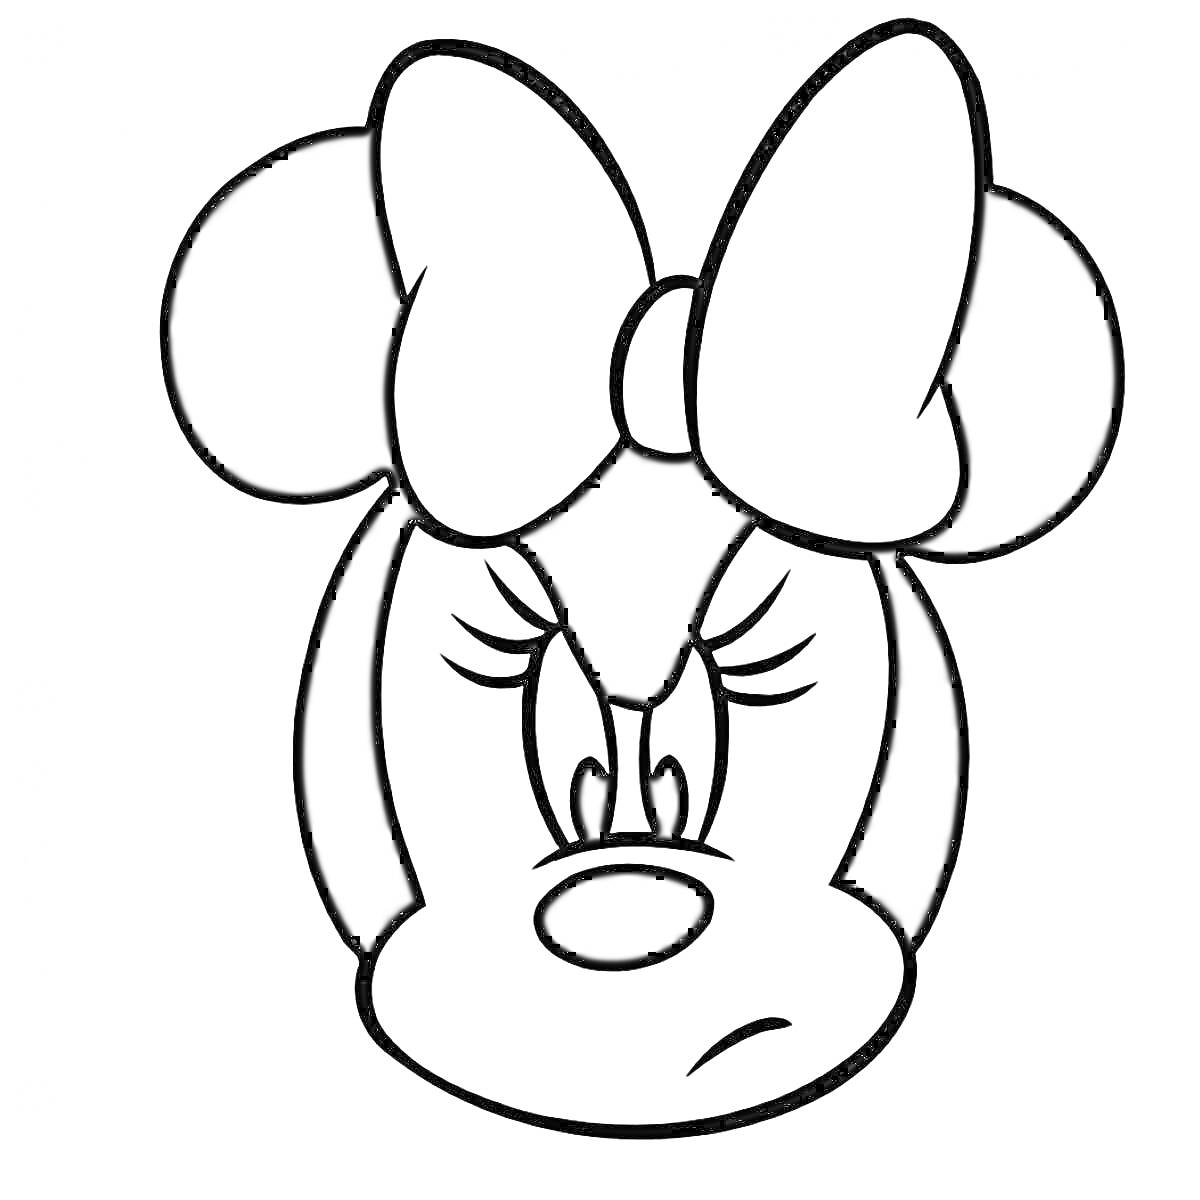  Минни Маус с бантом - голова, уши, глаза, бант, нос